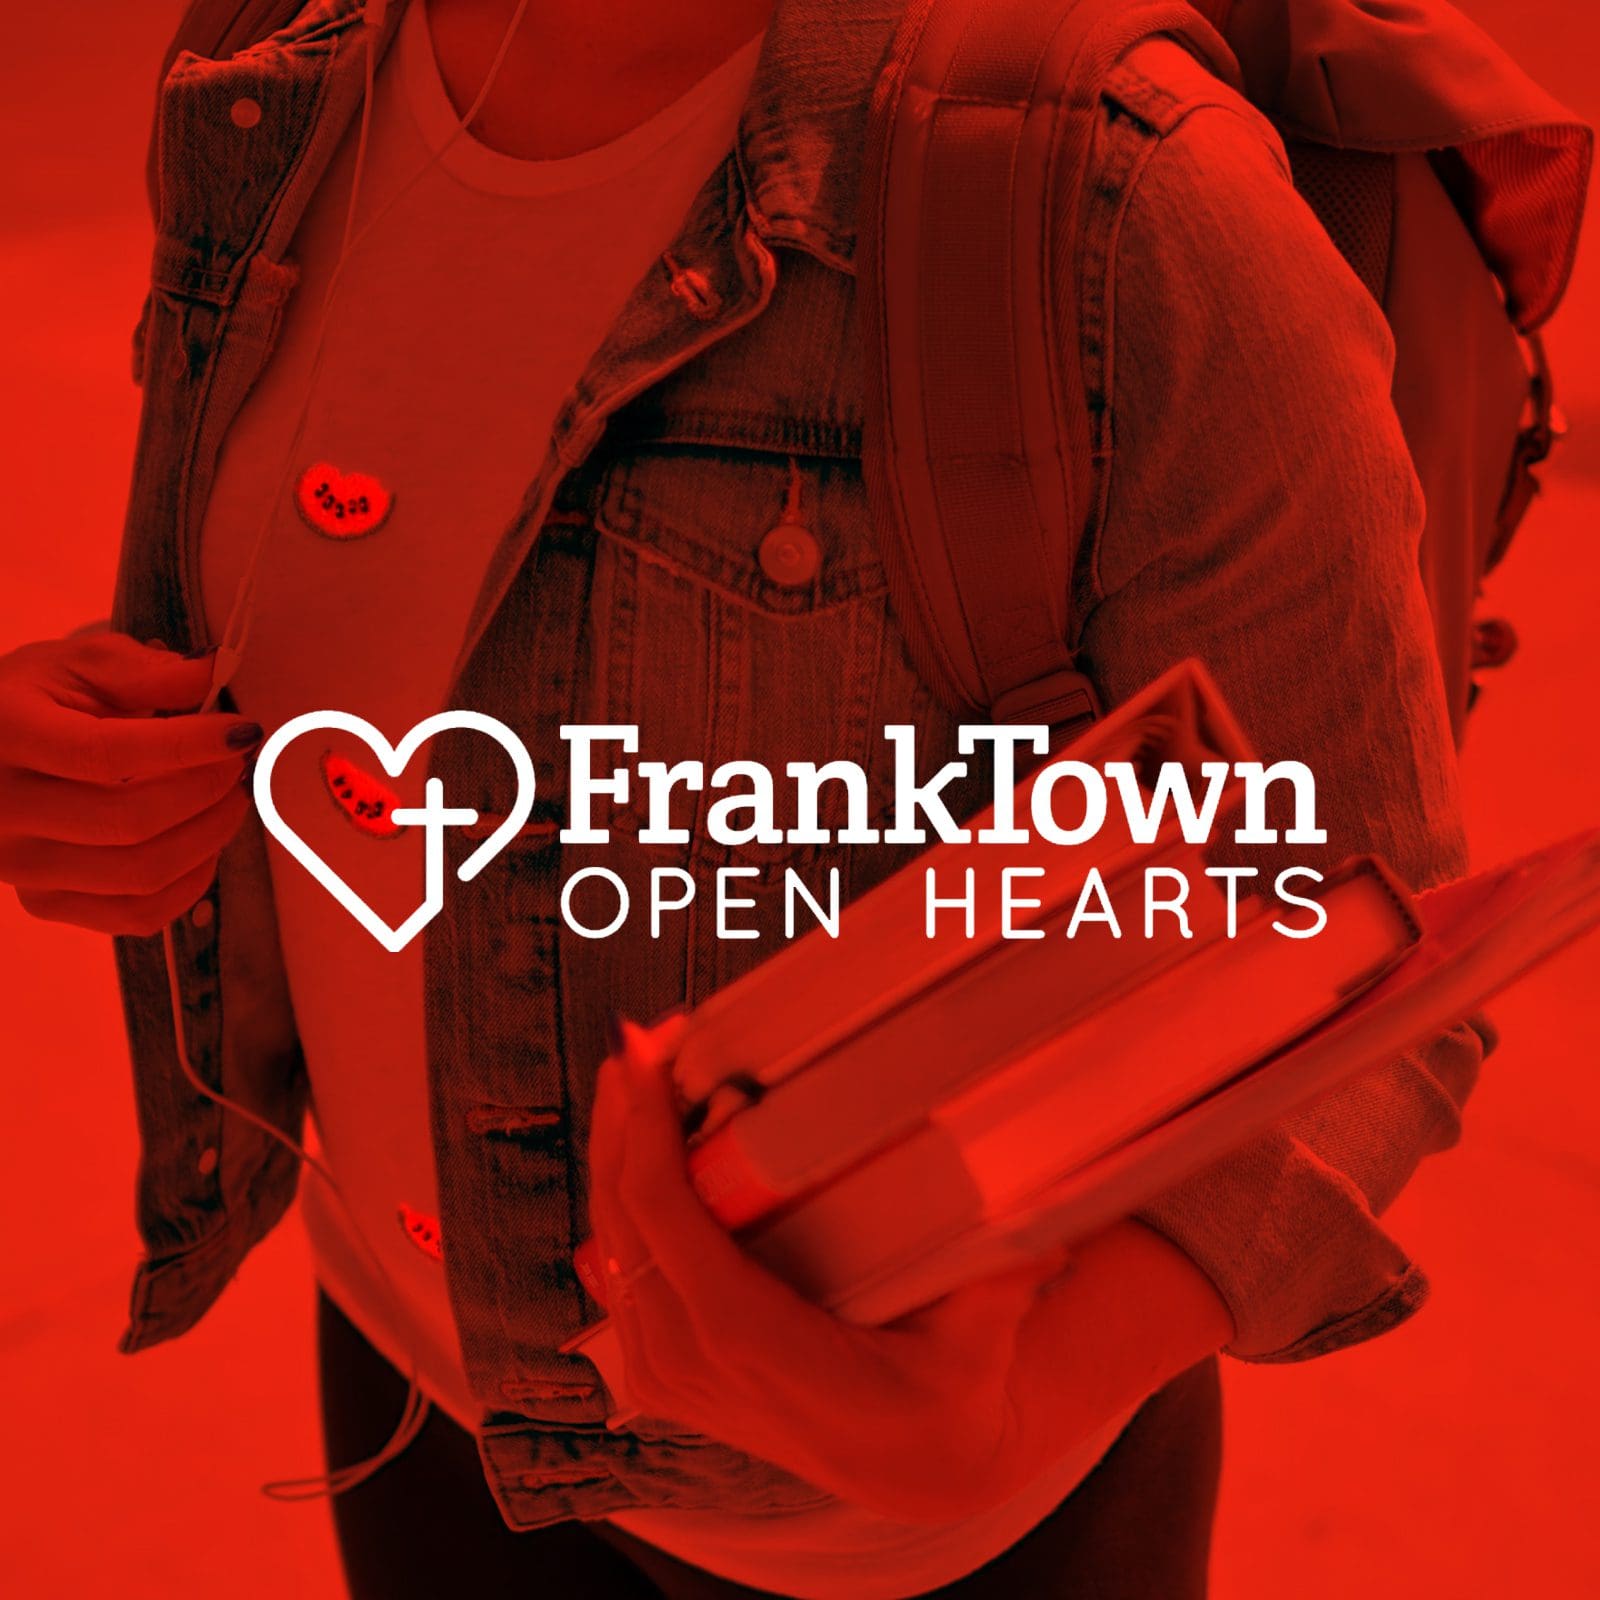 FrankTown Open Hearts - Nashville Web Design